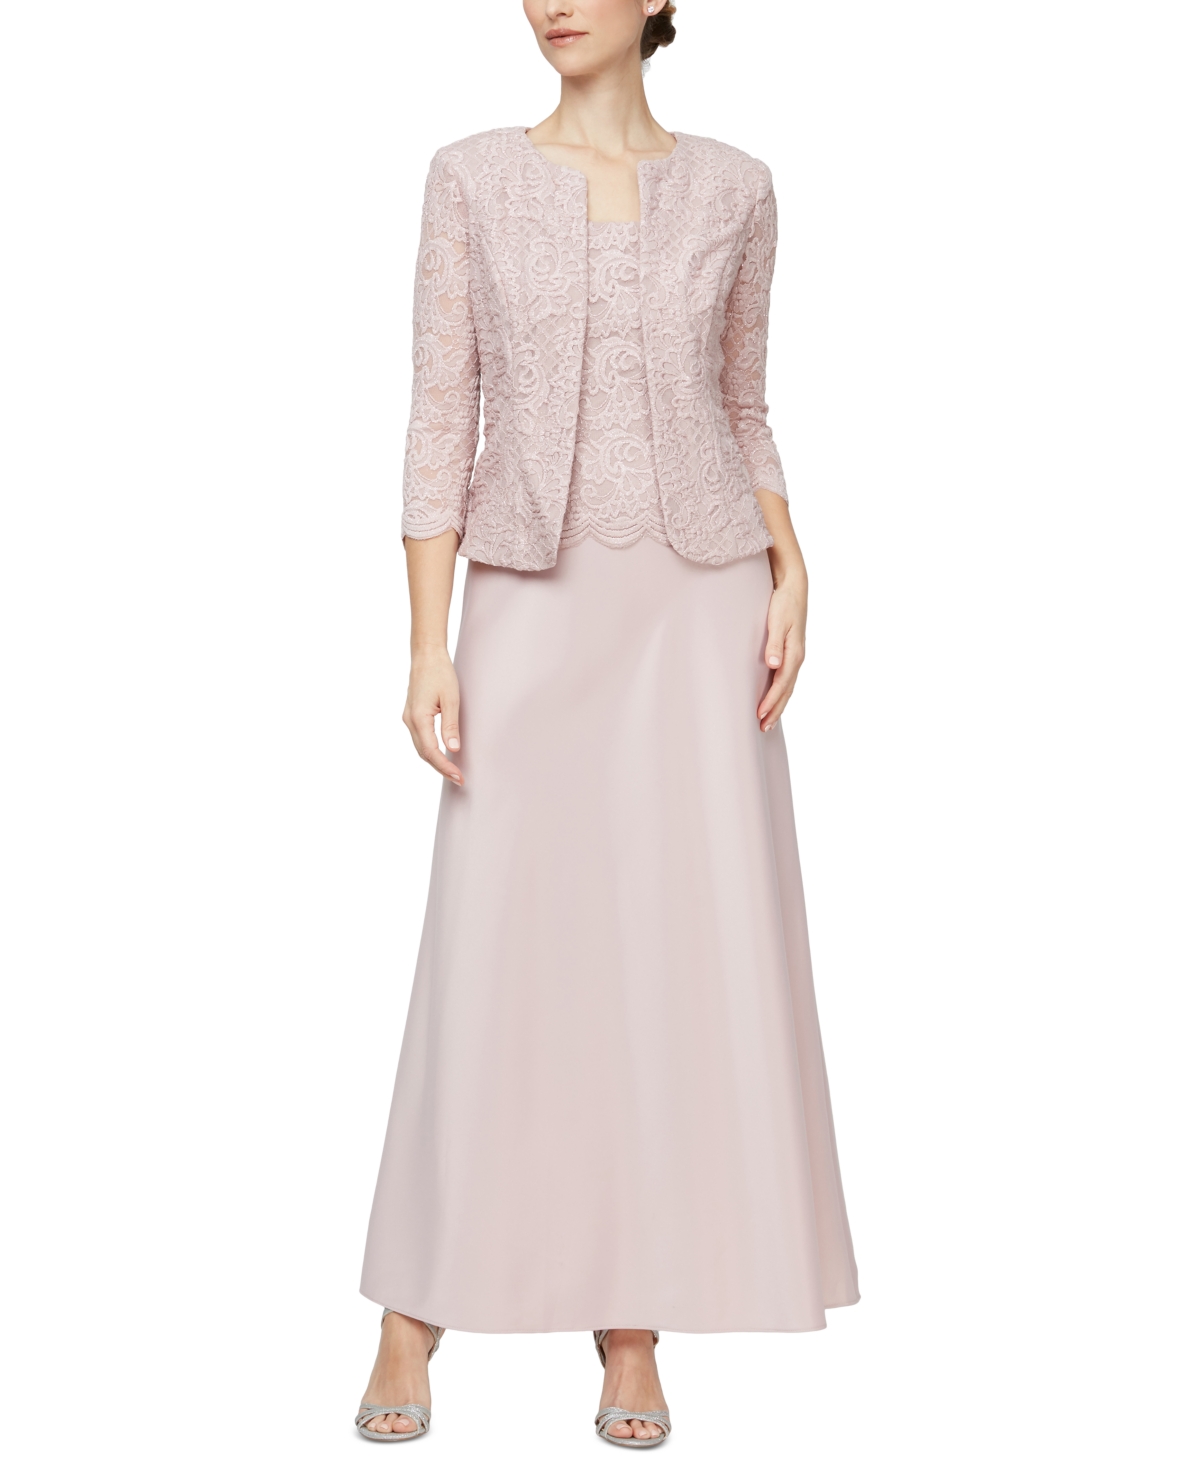 Lace Jacket & Lace-Top Gown - Blush